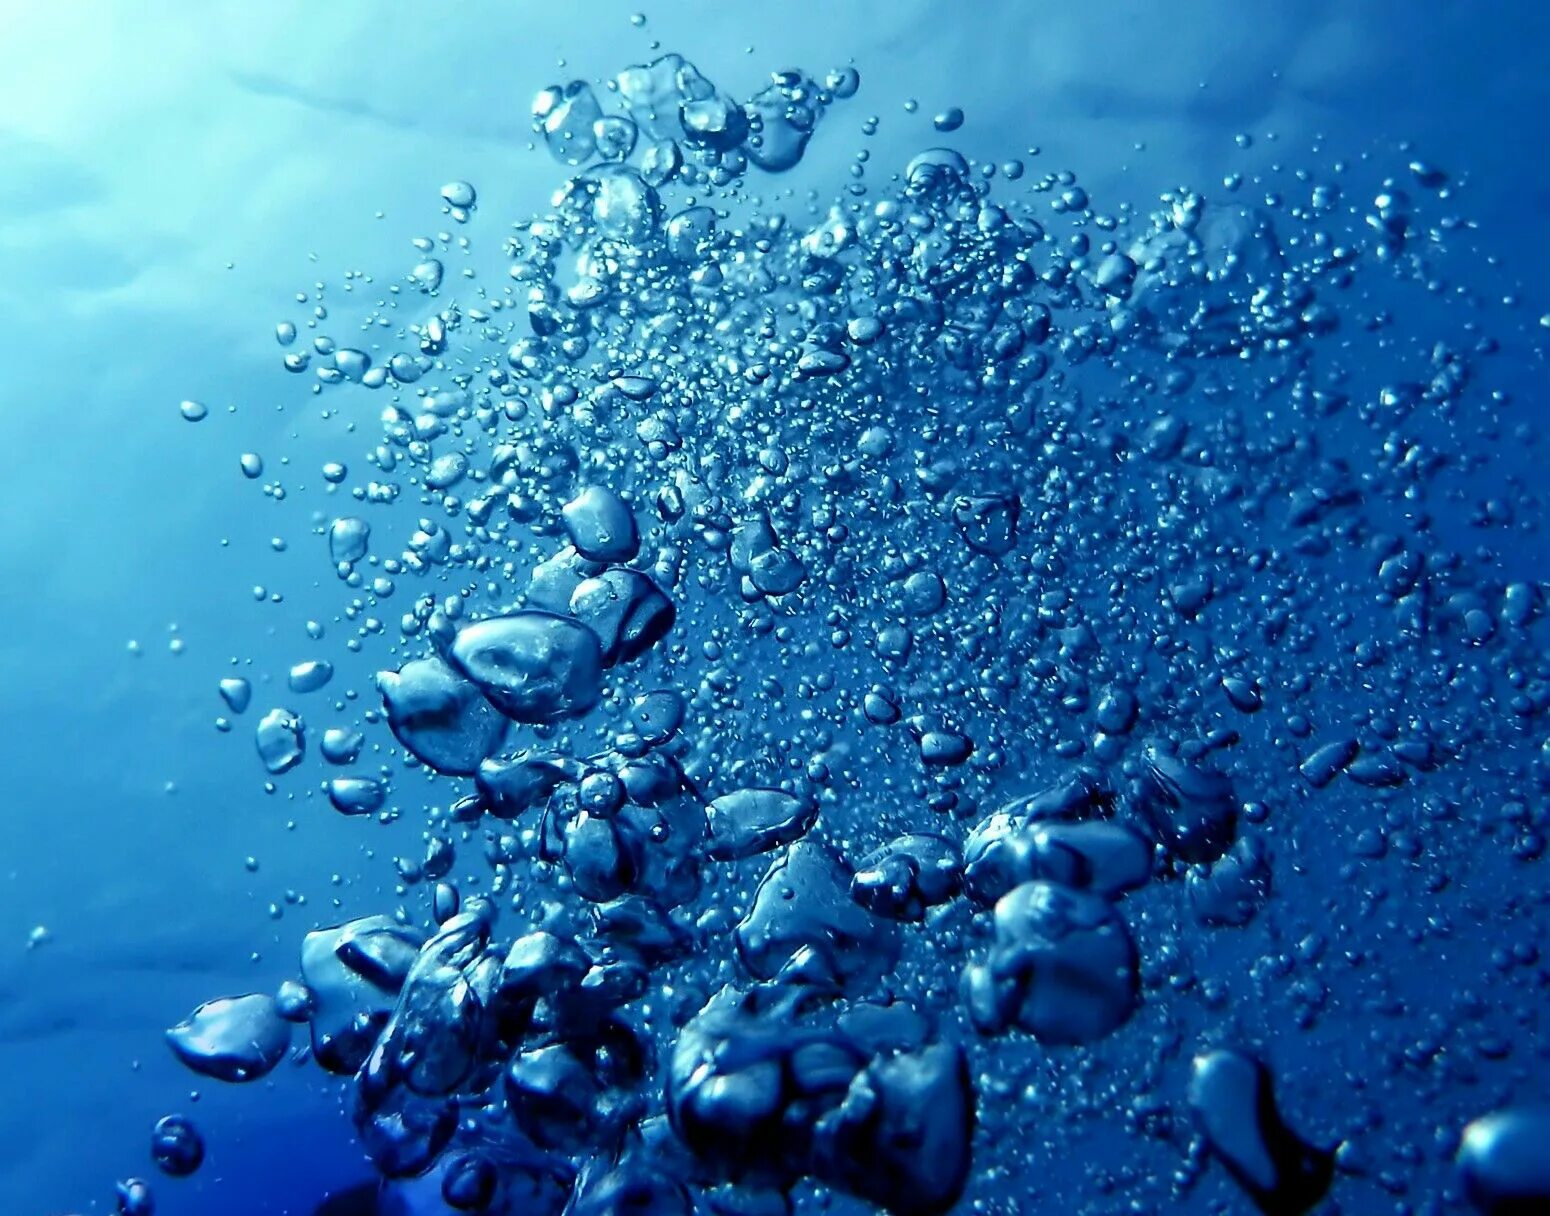 Природа растворения. Кислород. Вода фон. Кислород в воде. Кислород фото.